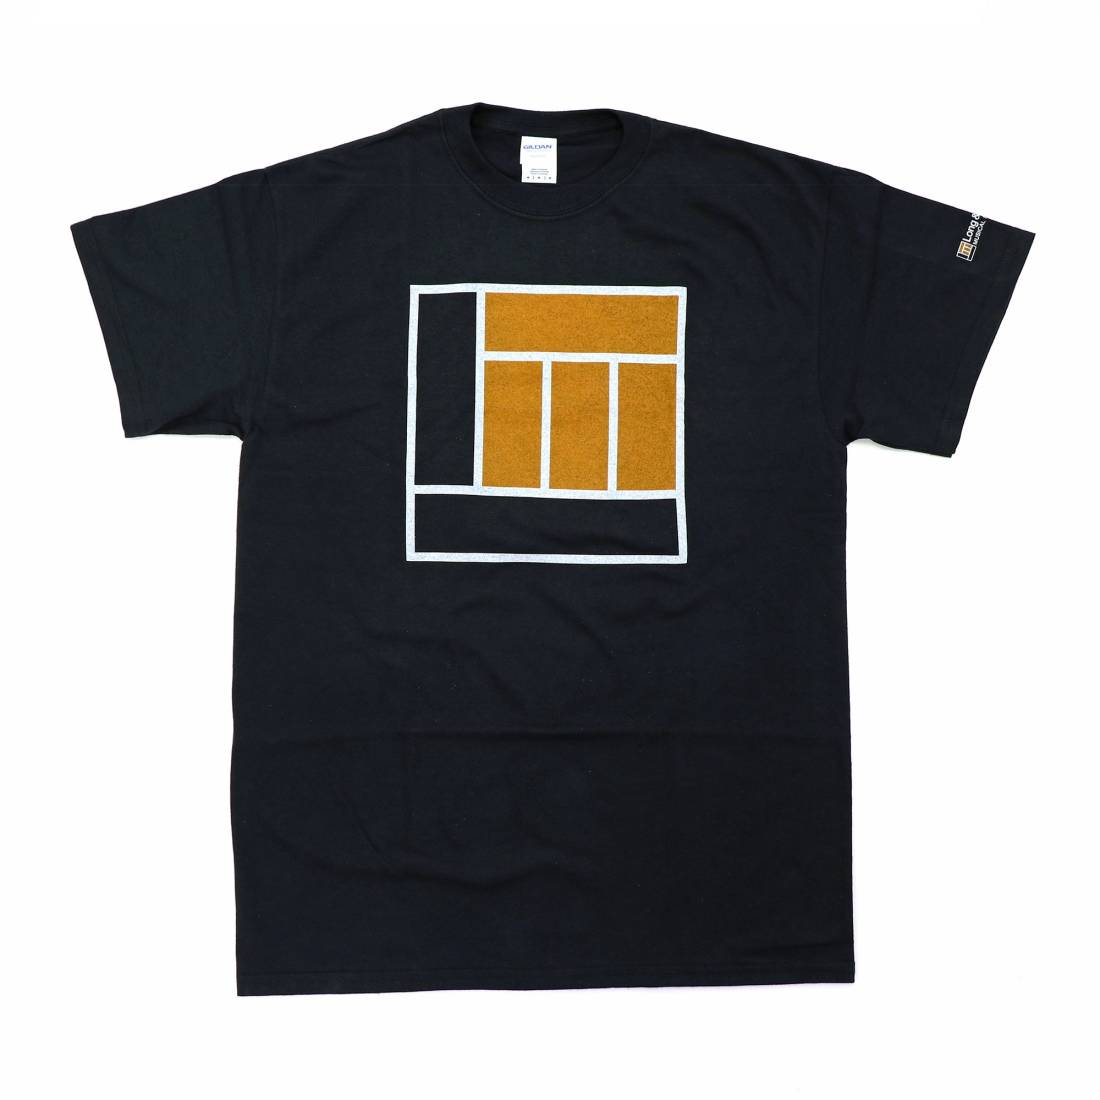 Long & McQuade Logo T-Shirt - Black, Large